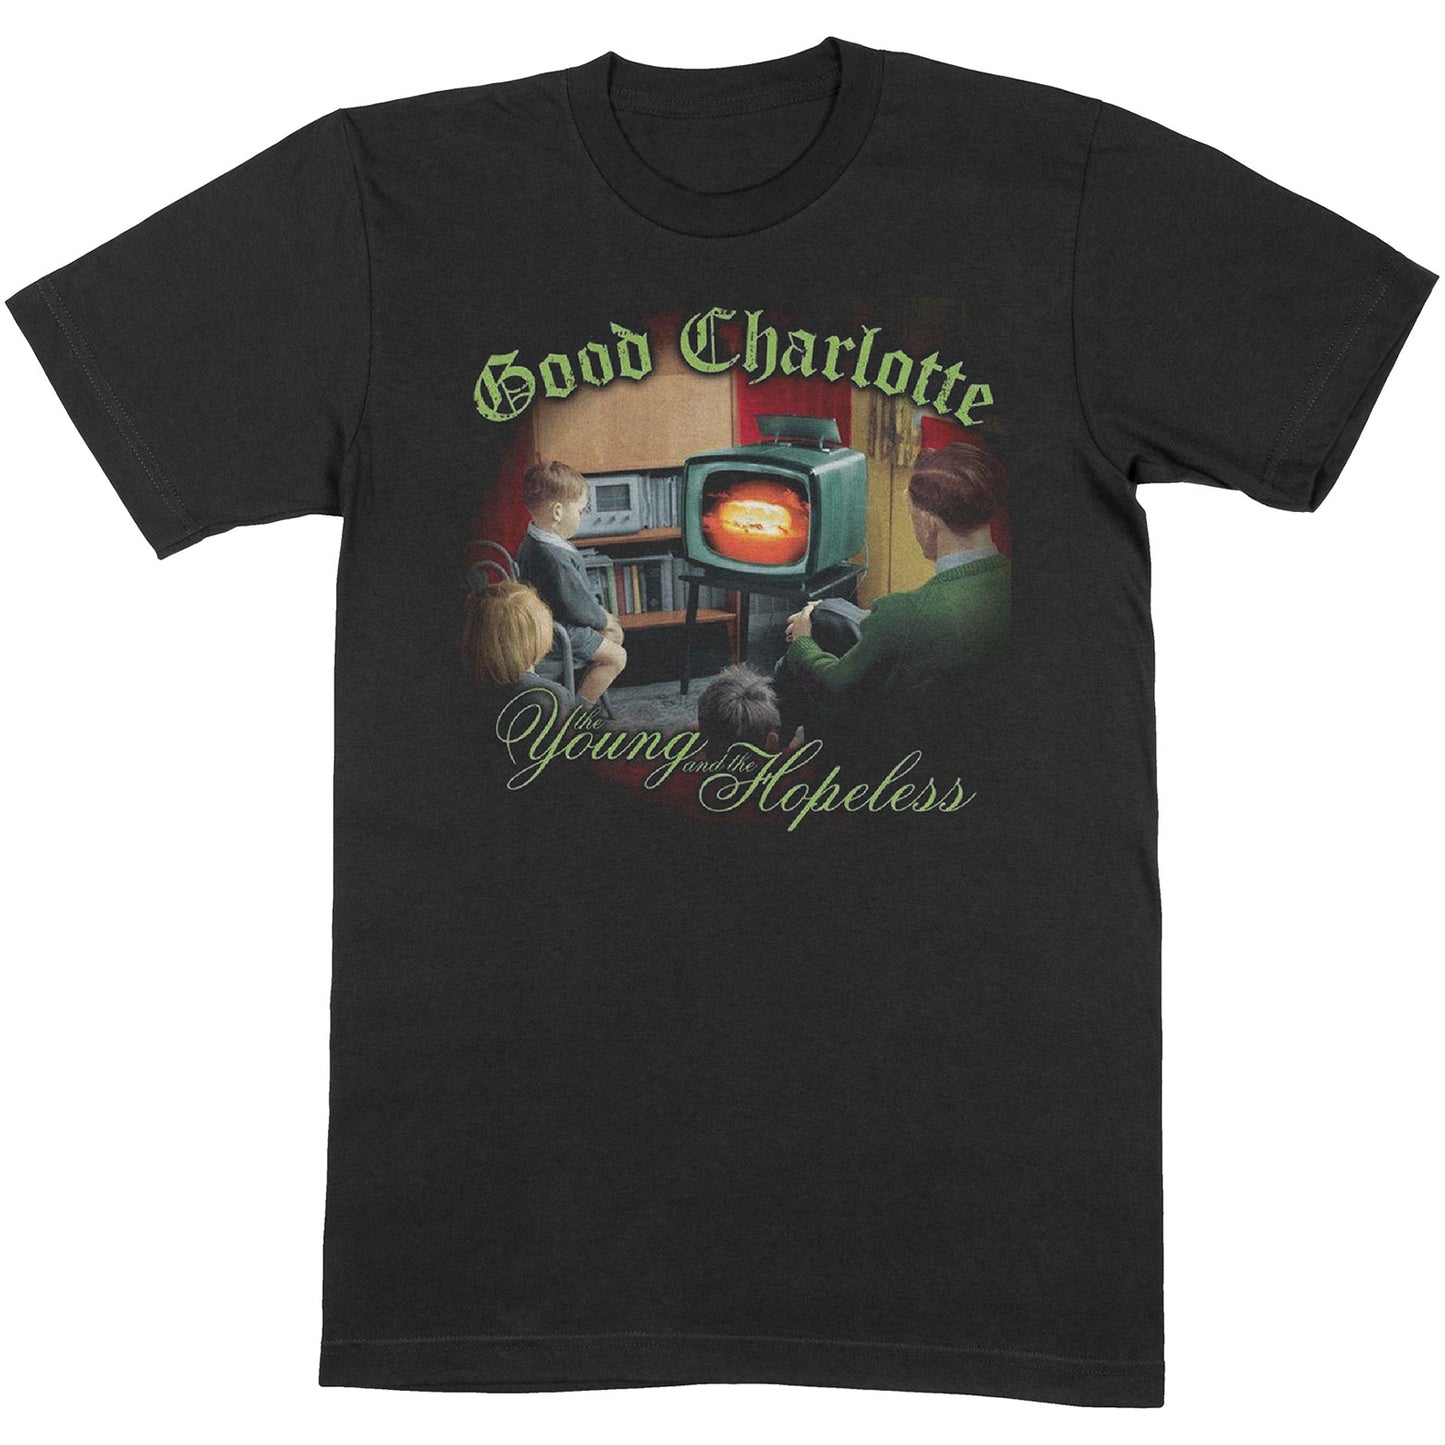 Good Charlotte T-Shirt: Young & Hopeless